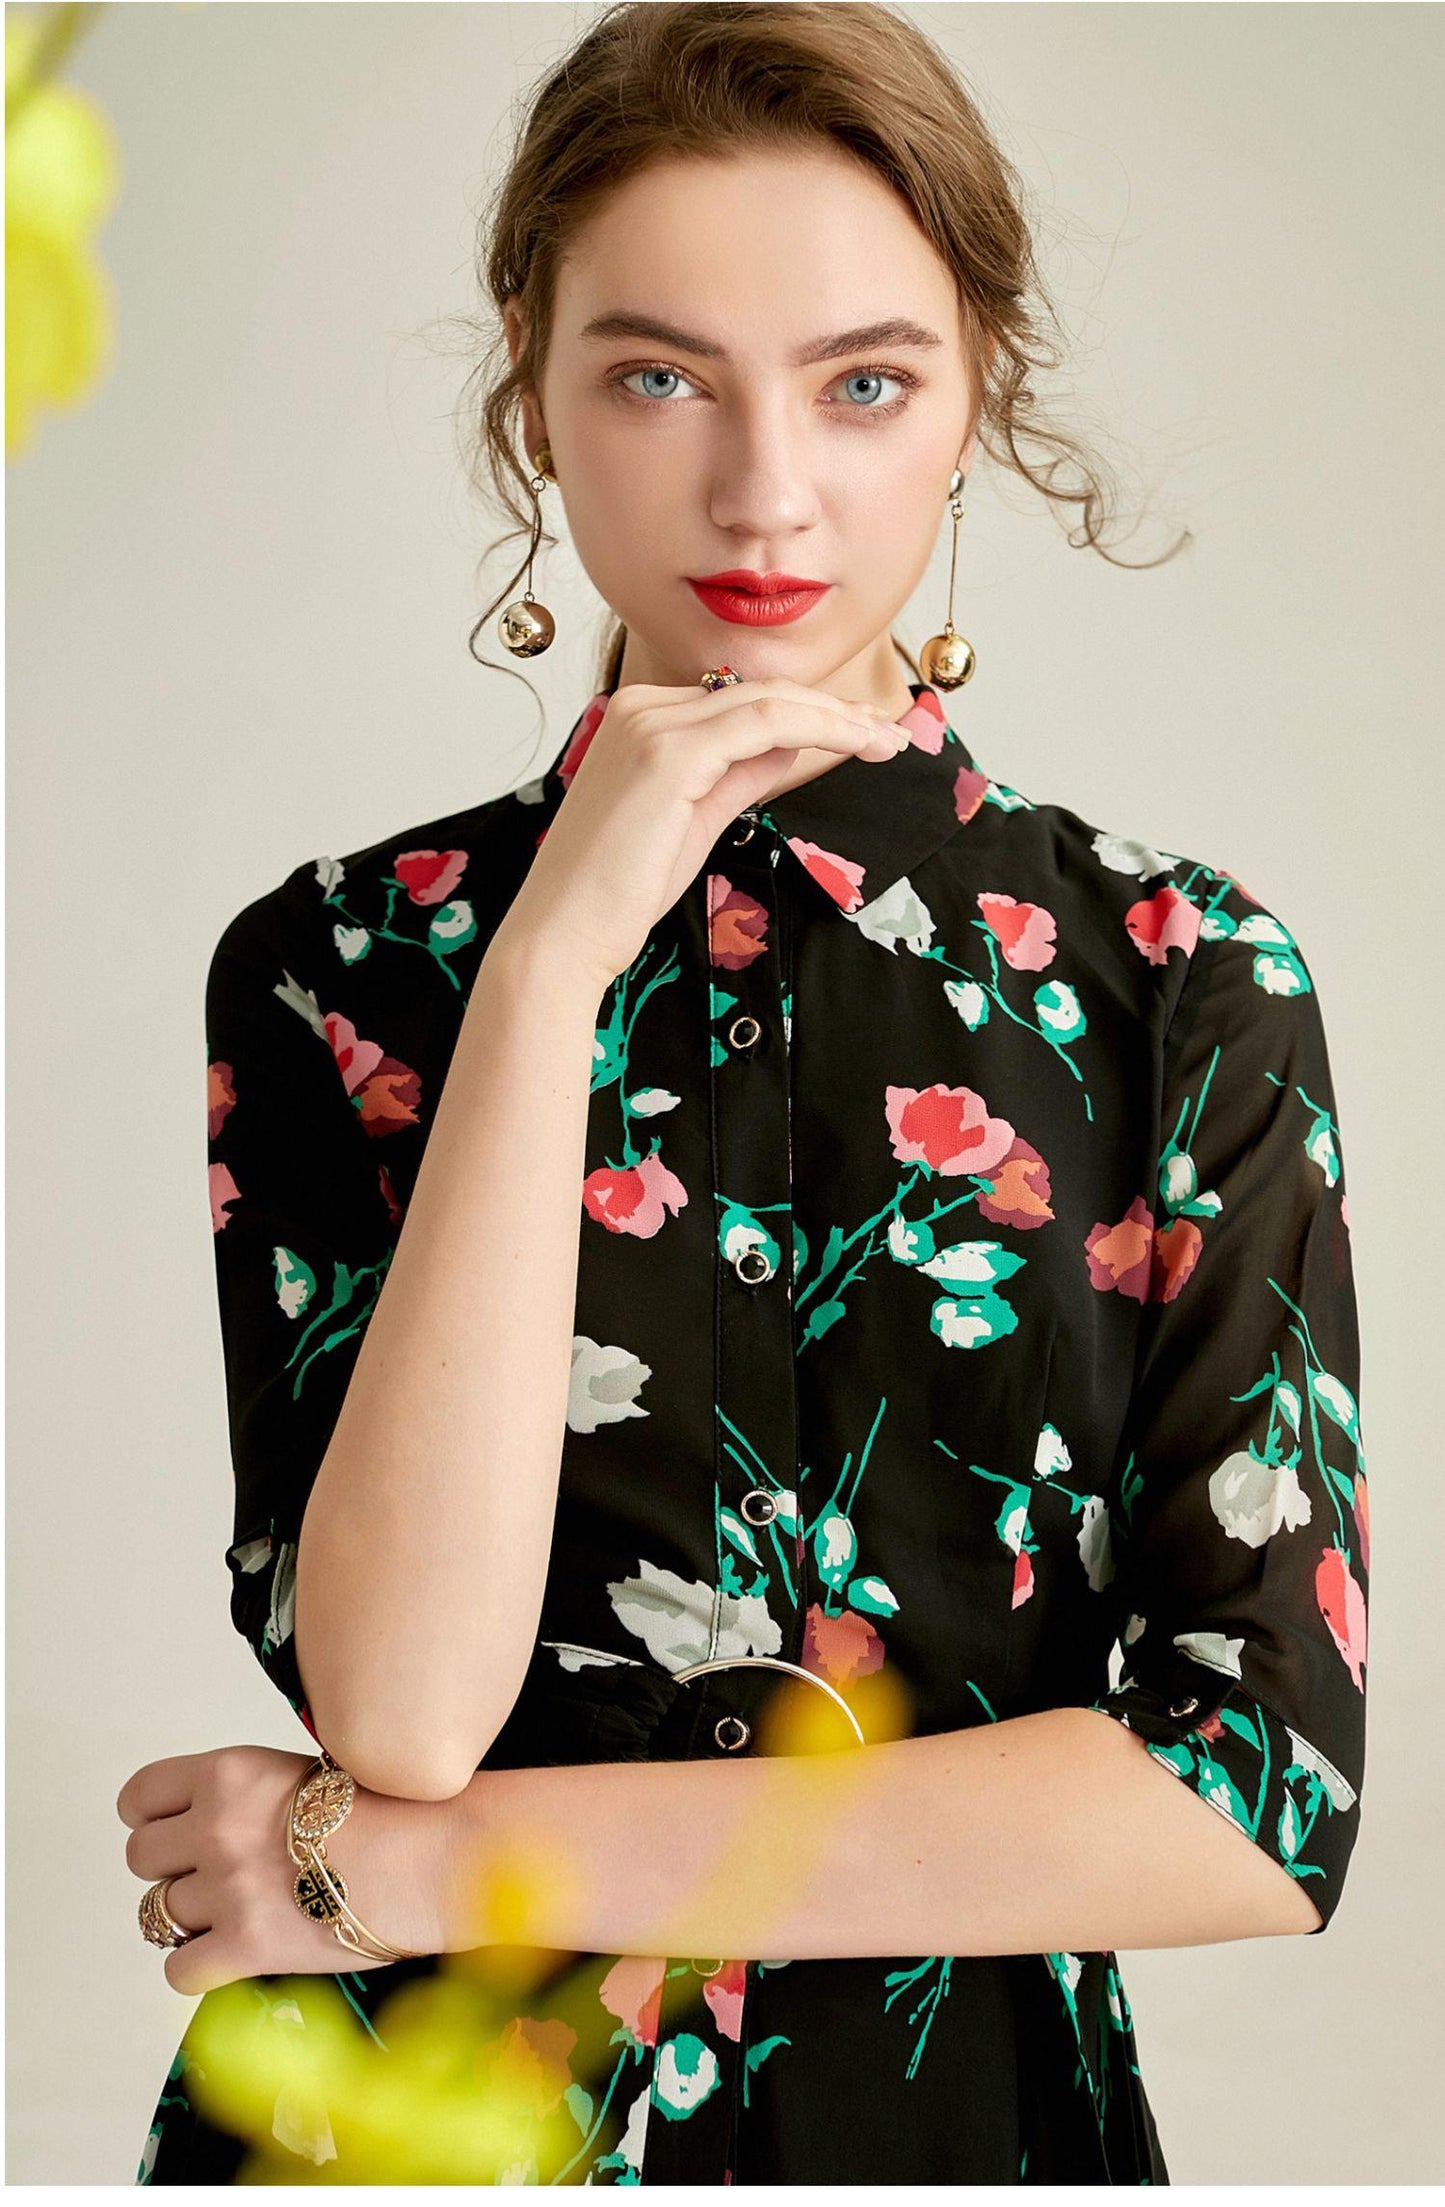 Designer lapel simple elegant floral print irregular swing chiffon lbd black floral dress - Inka